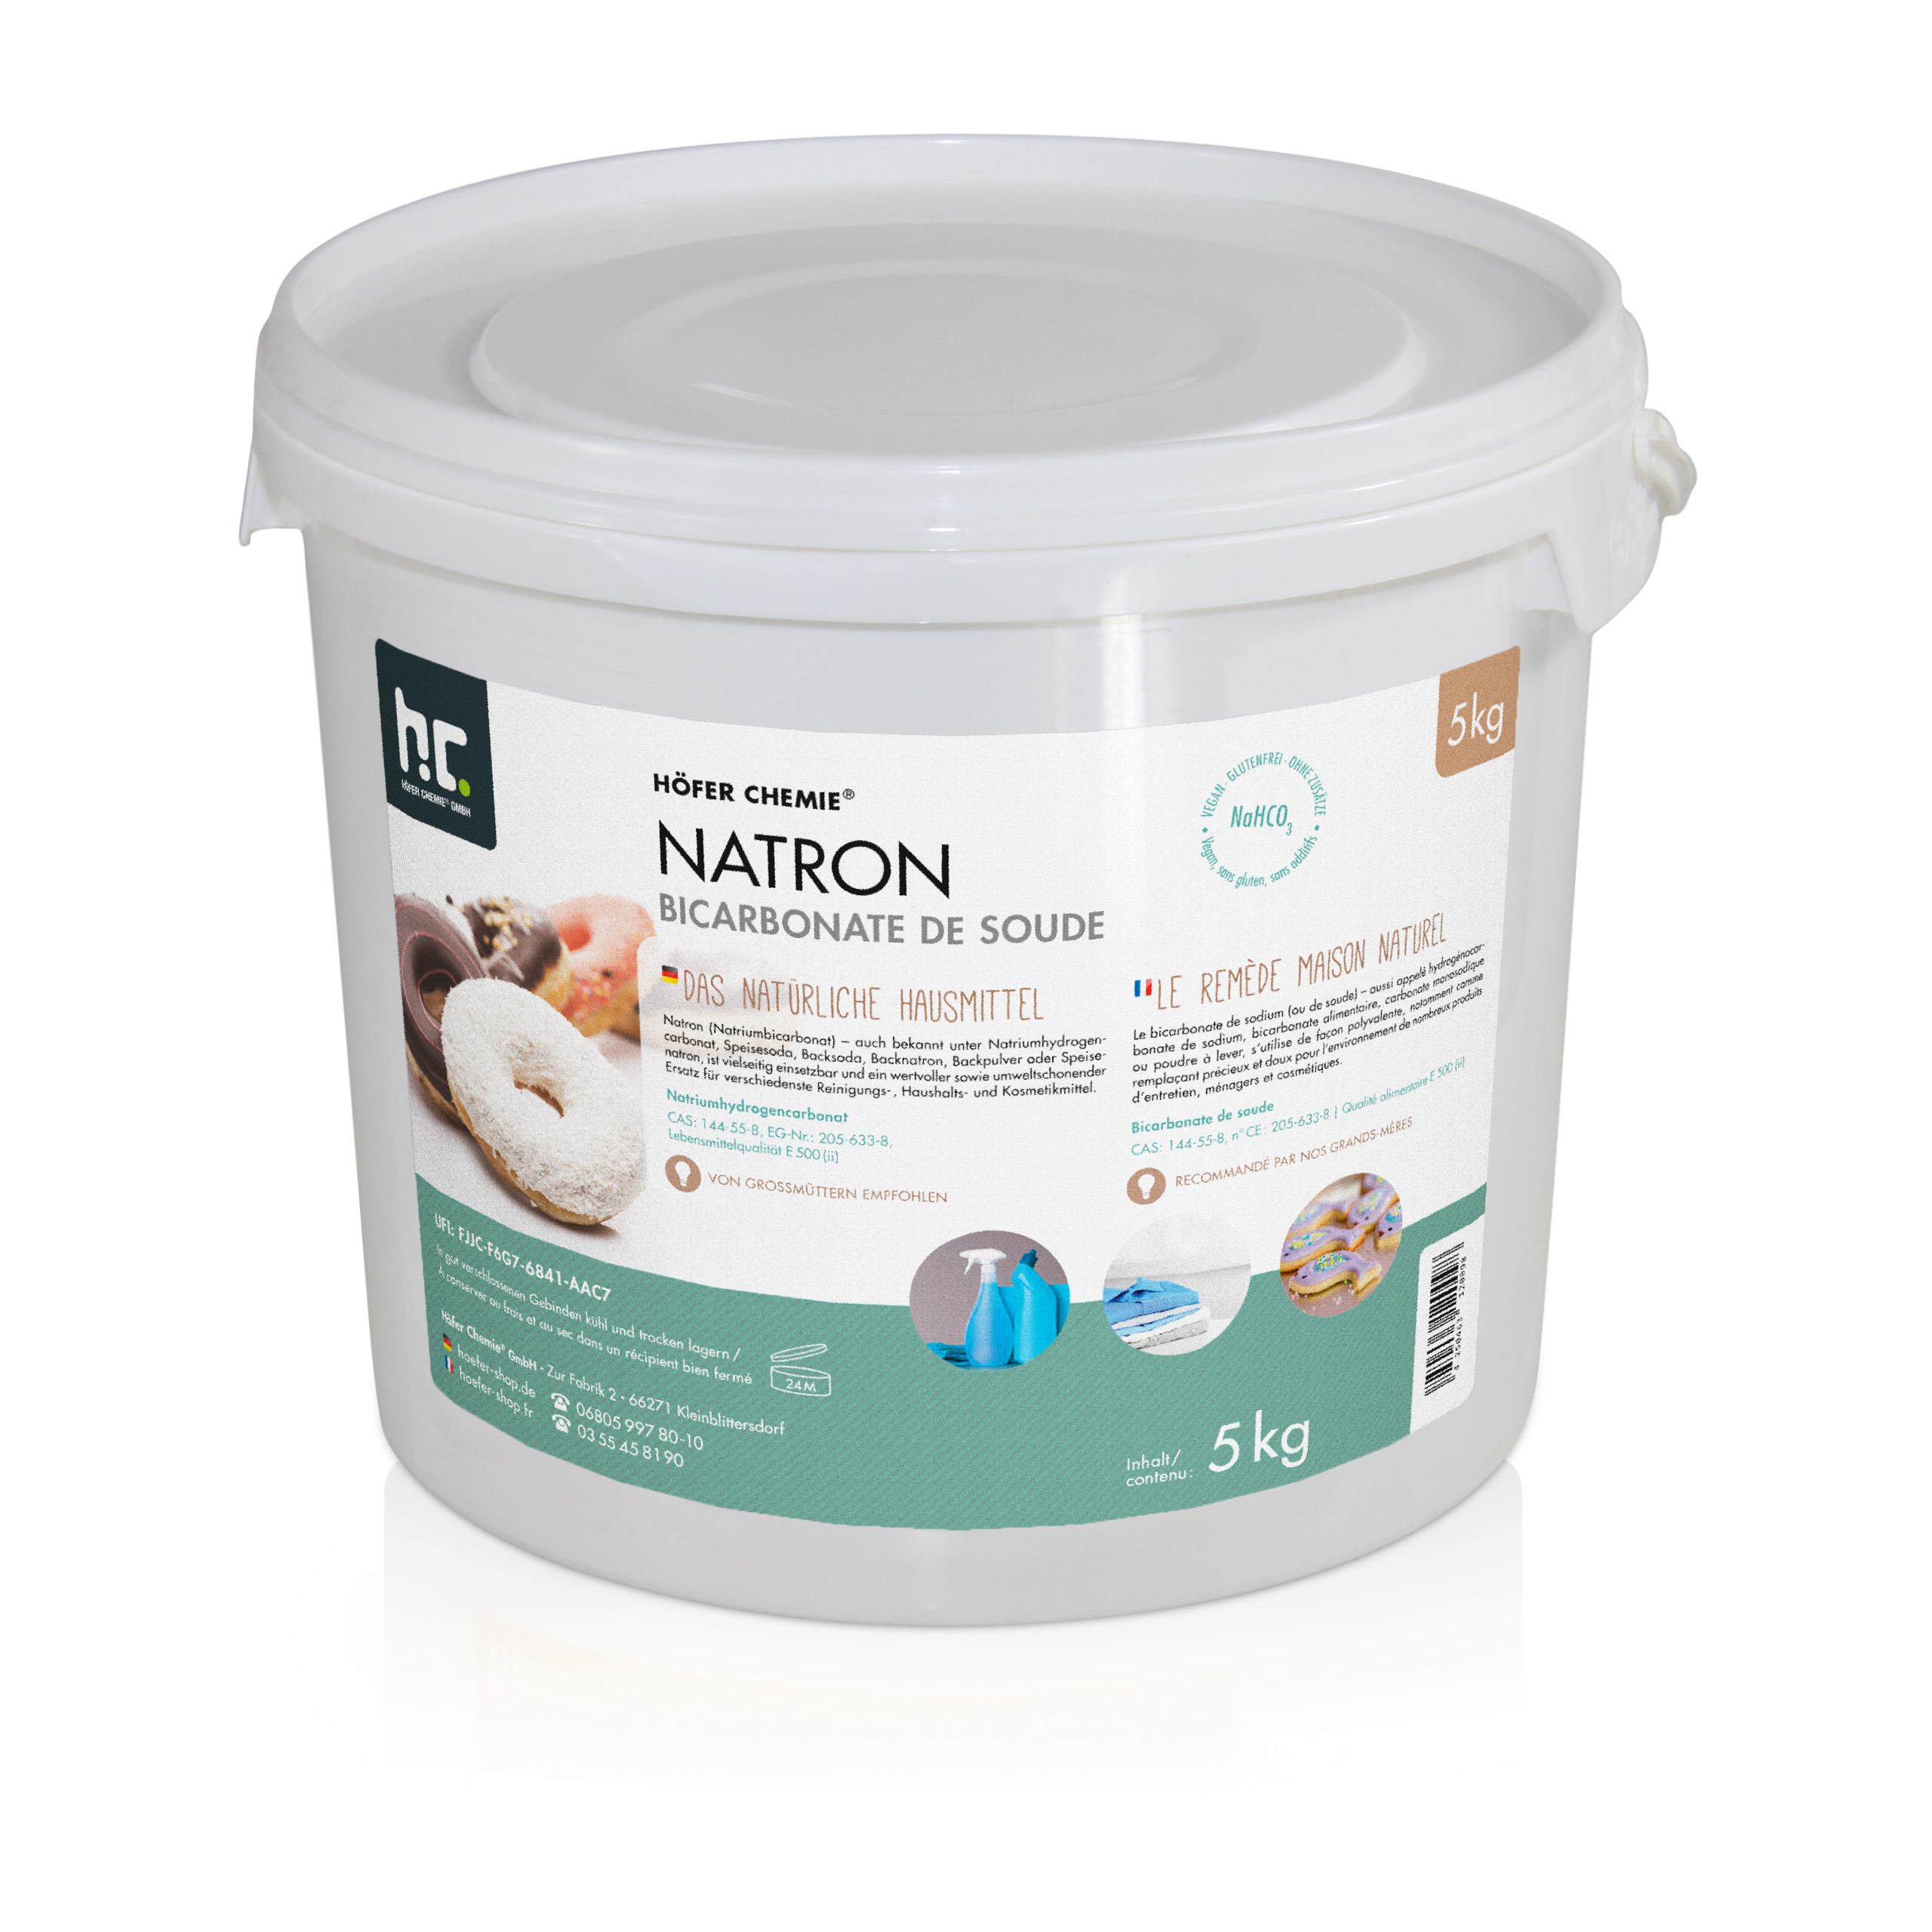 5 kg Natron Backsoda Natriumhydrogencarbonat in Lebensmittelqualität